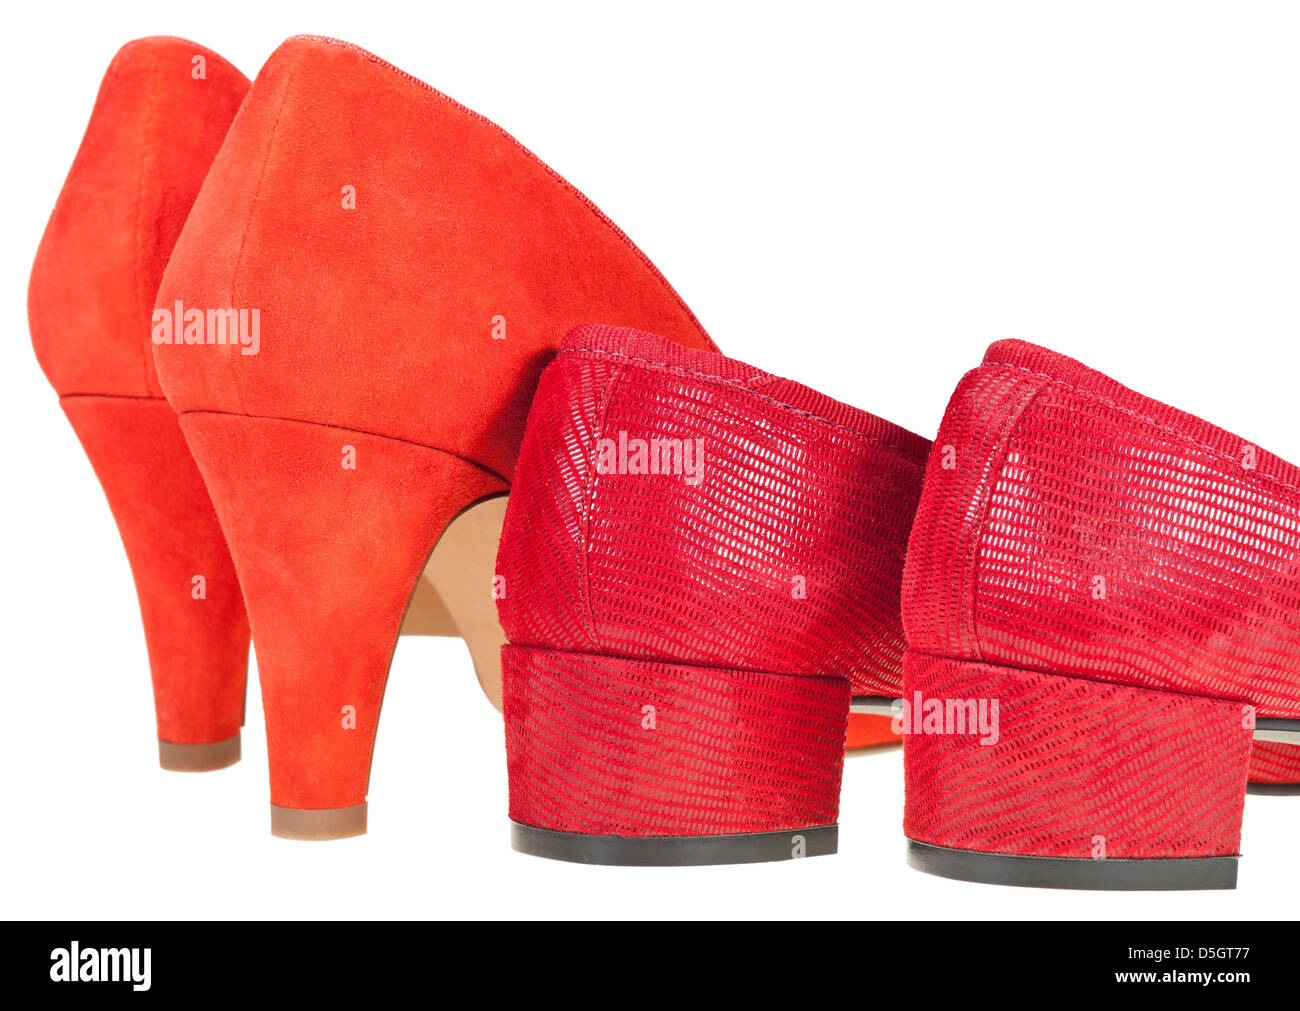 Zapatos de tacón bajo e imágenes de alta resolución - Alamy